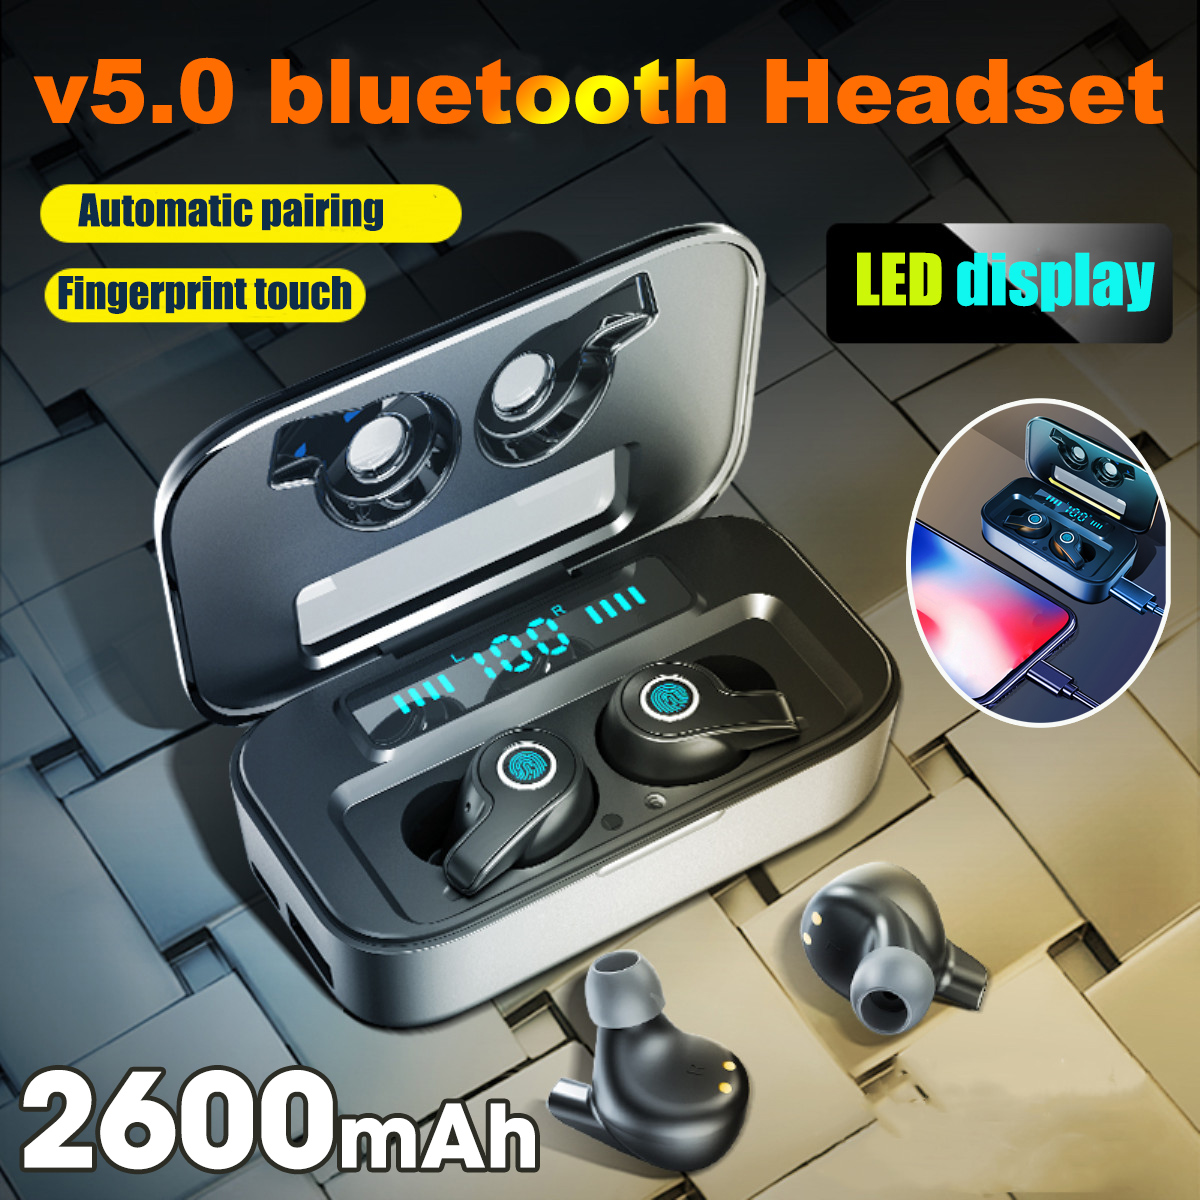 Bakeey-TWS-Wireless-bluetooth-Headset-2600mAh-Large-Capacity-In-ear-Earphone-Stereo-Earbuds-IPX5-Wat-1700765-1